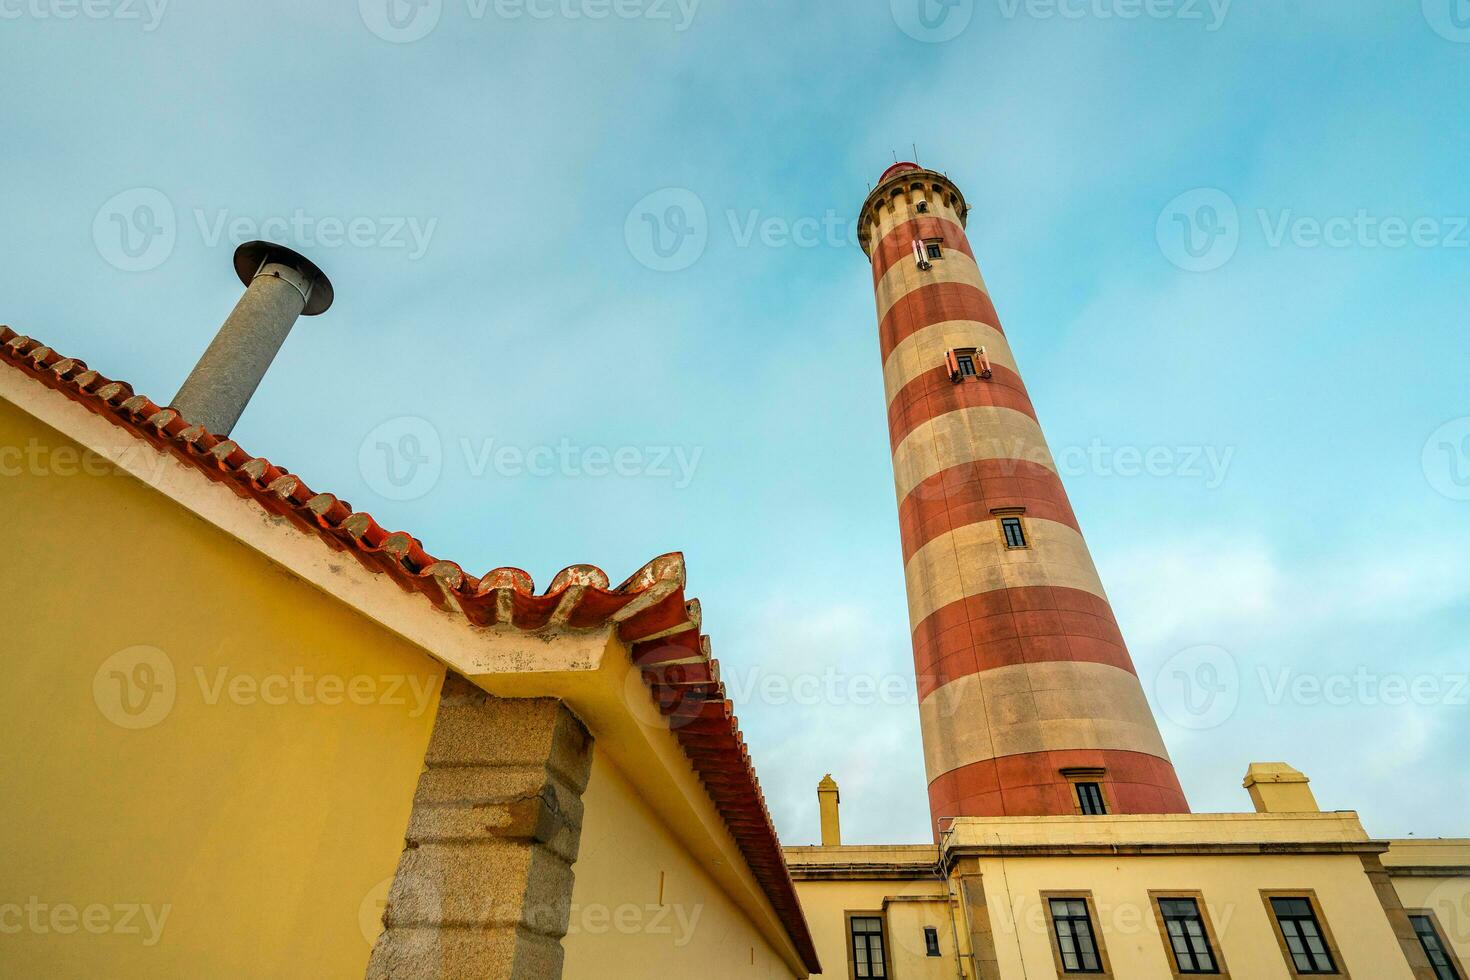 Farol de Aveiro. Lighthouse in the coast of Aveiro, Portugal. photo